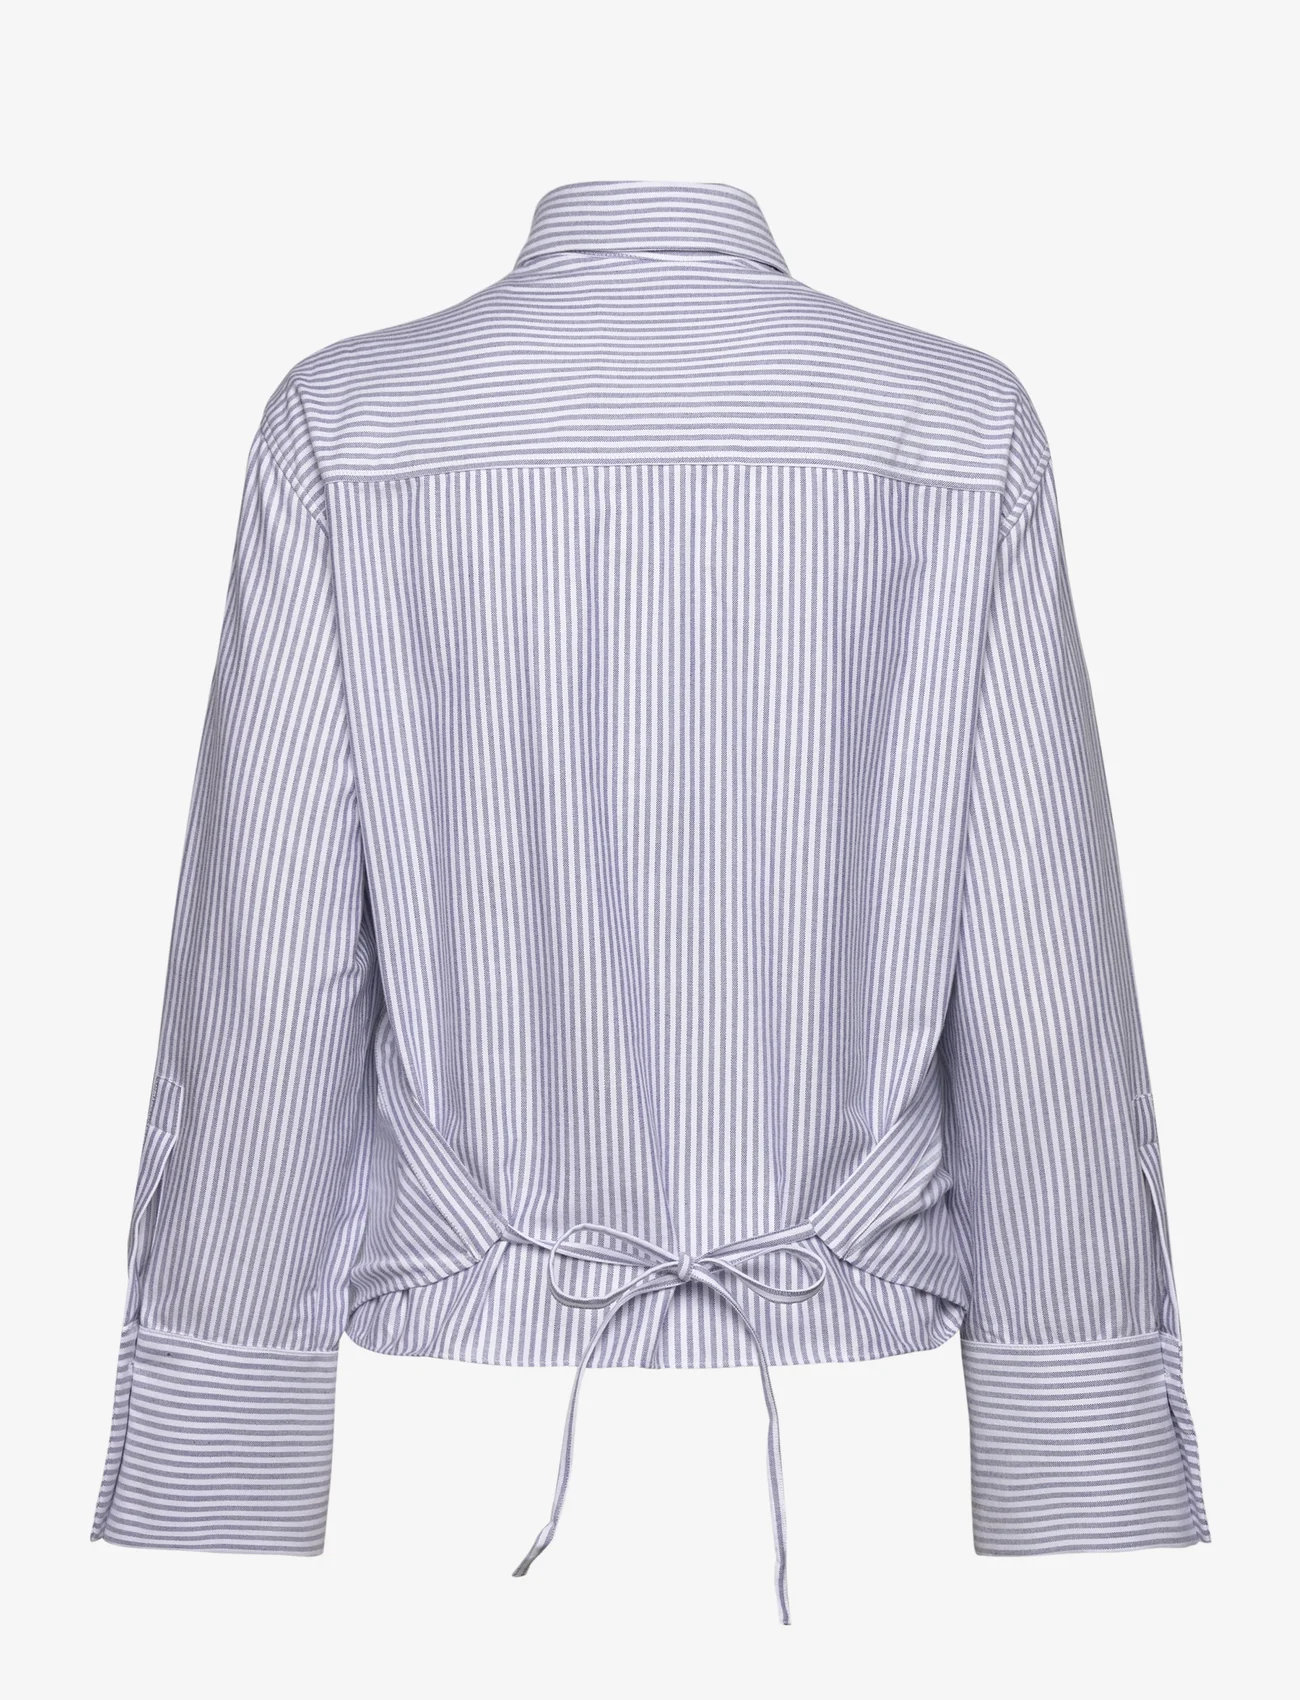 Mango - Striped cotton wrap blouse - medium blue - 1